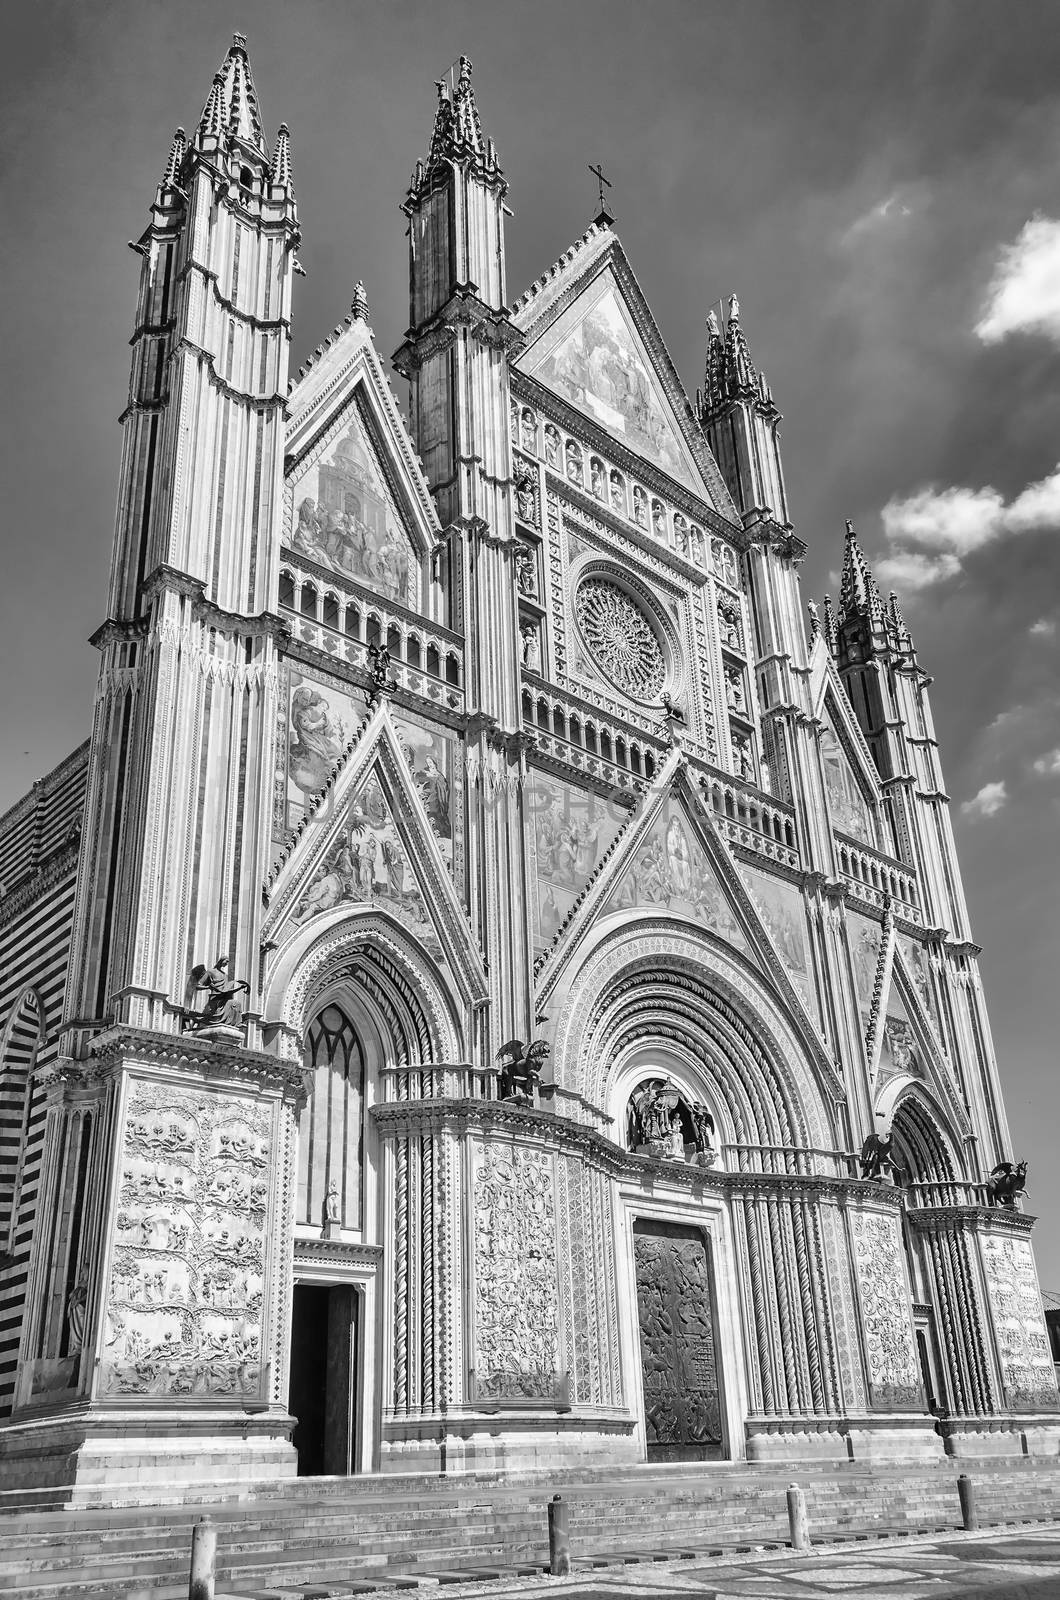 Orvieto Cathedral, Italy by marcorubino